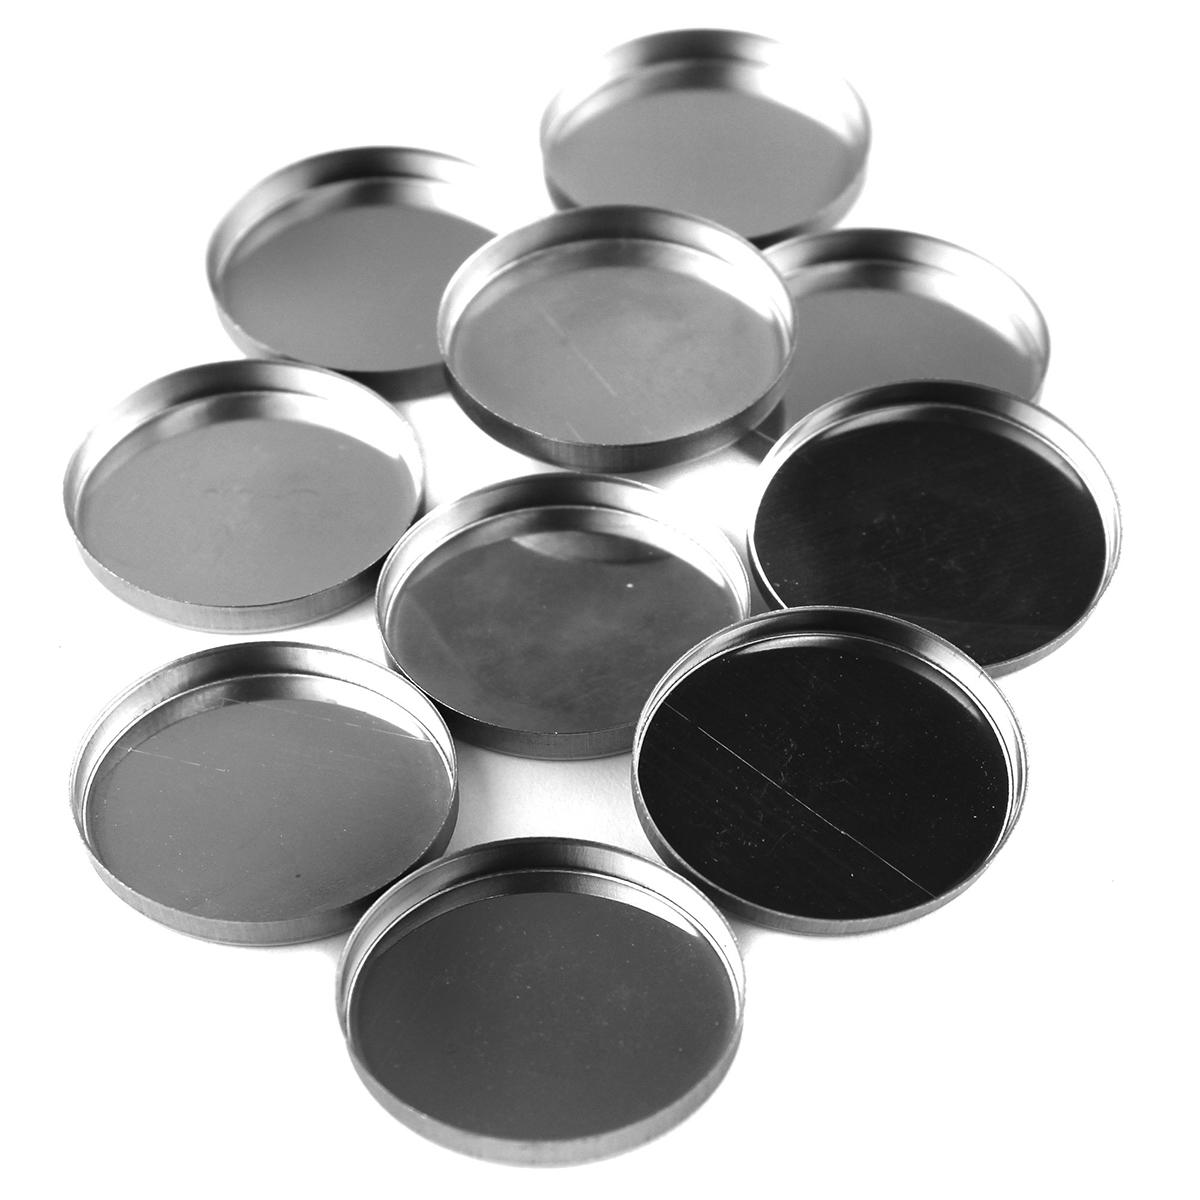 Z Palette Round Empty Metal Pans 10 pack